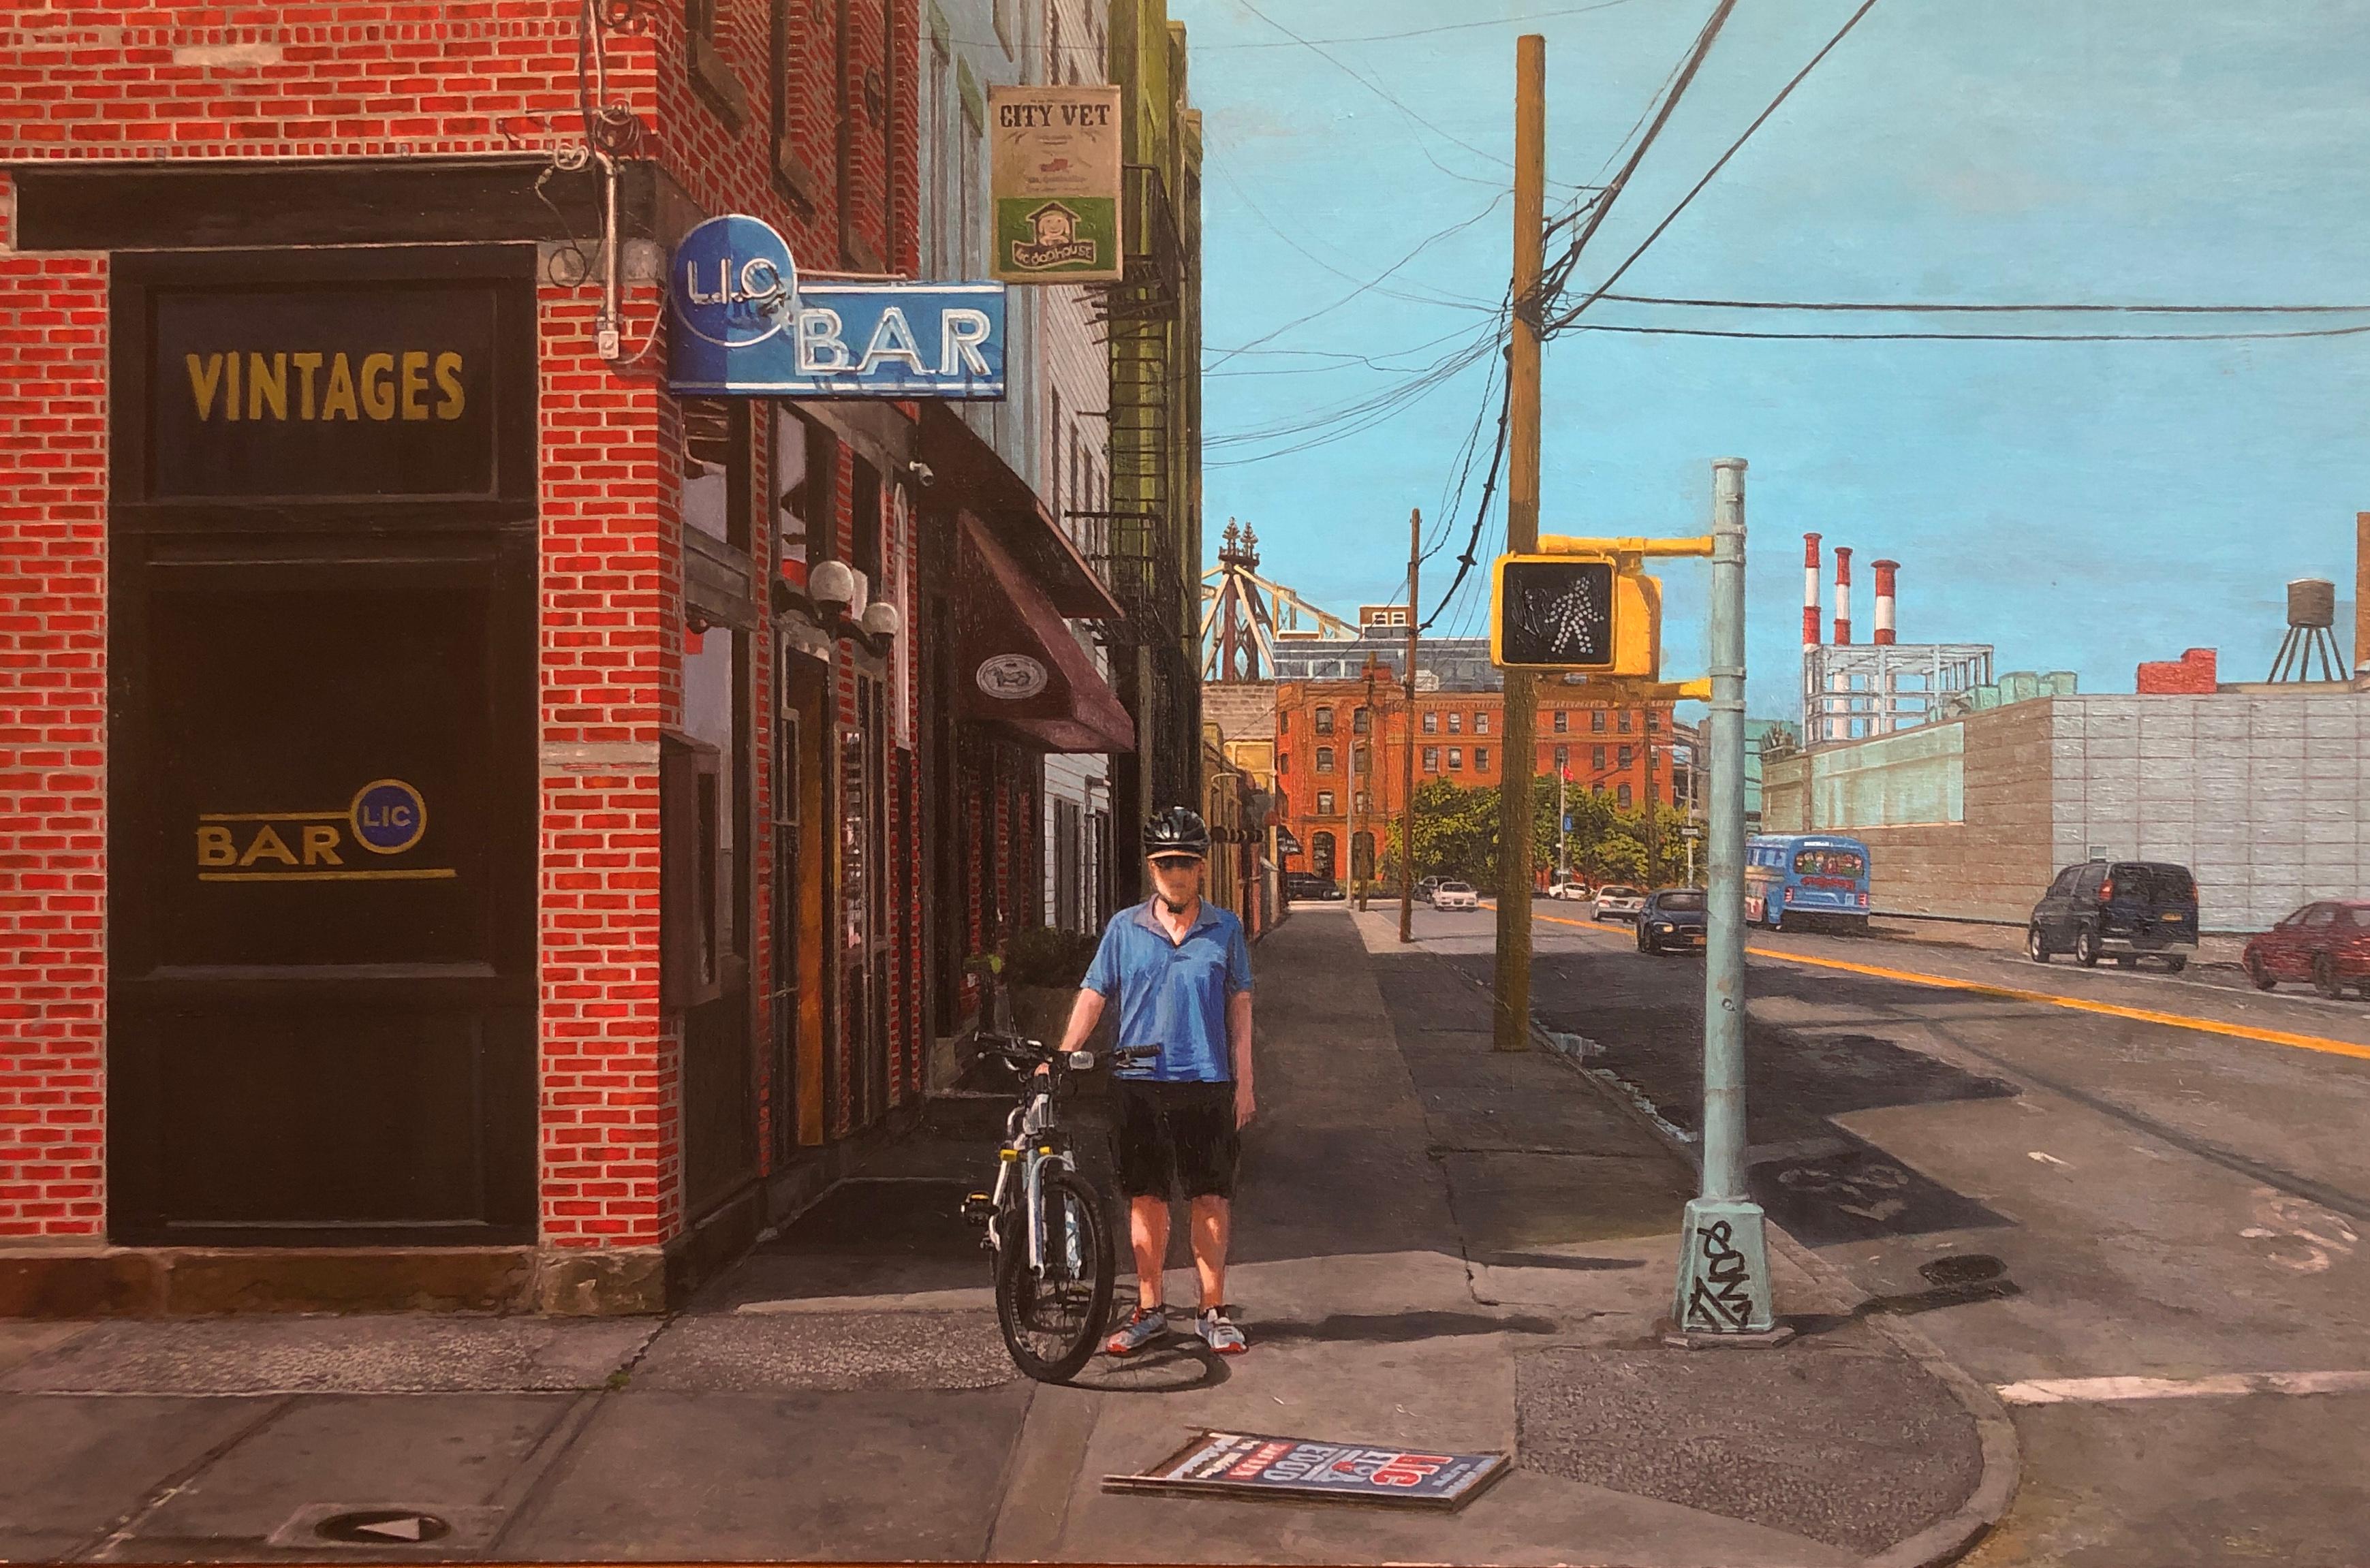 David Desimone Figurative Painting - DAVID DESIMONE, "LIC Bar" oil on panel, American realist NYC urban landscape 